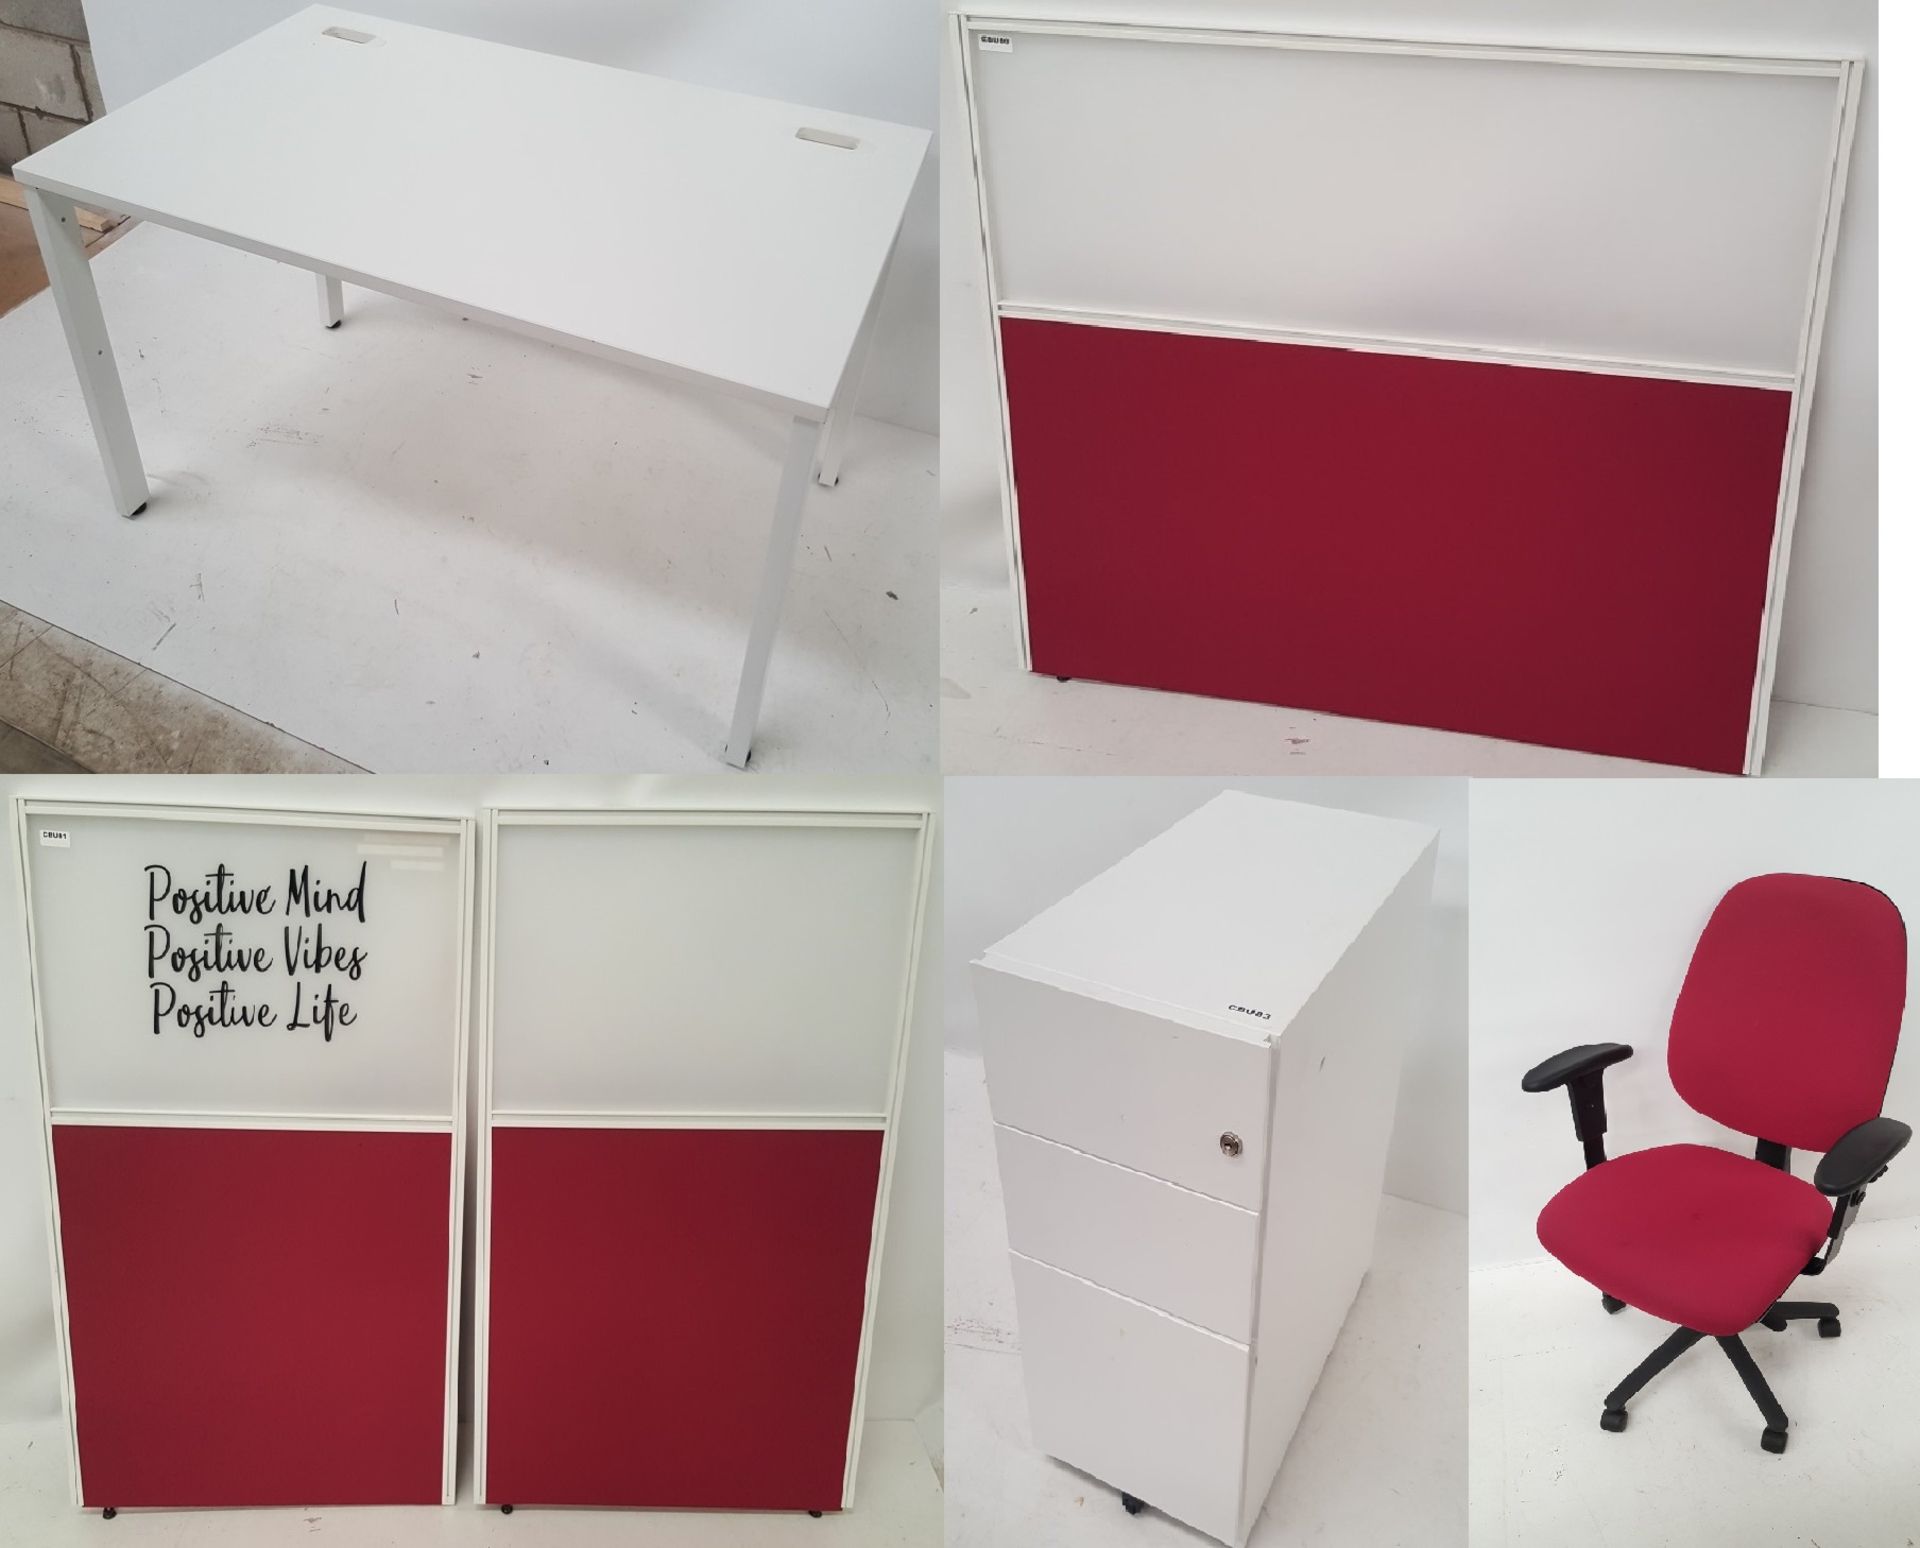 4 x Gresham Contemporary Office Desk Sets in White - Includes Desks, Swivel Chairs, Drawer Pedestals